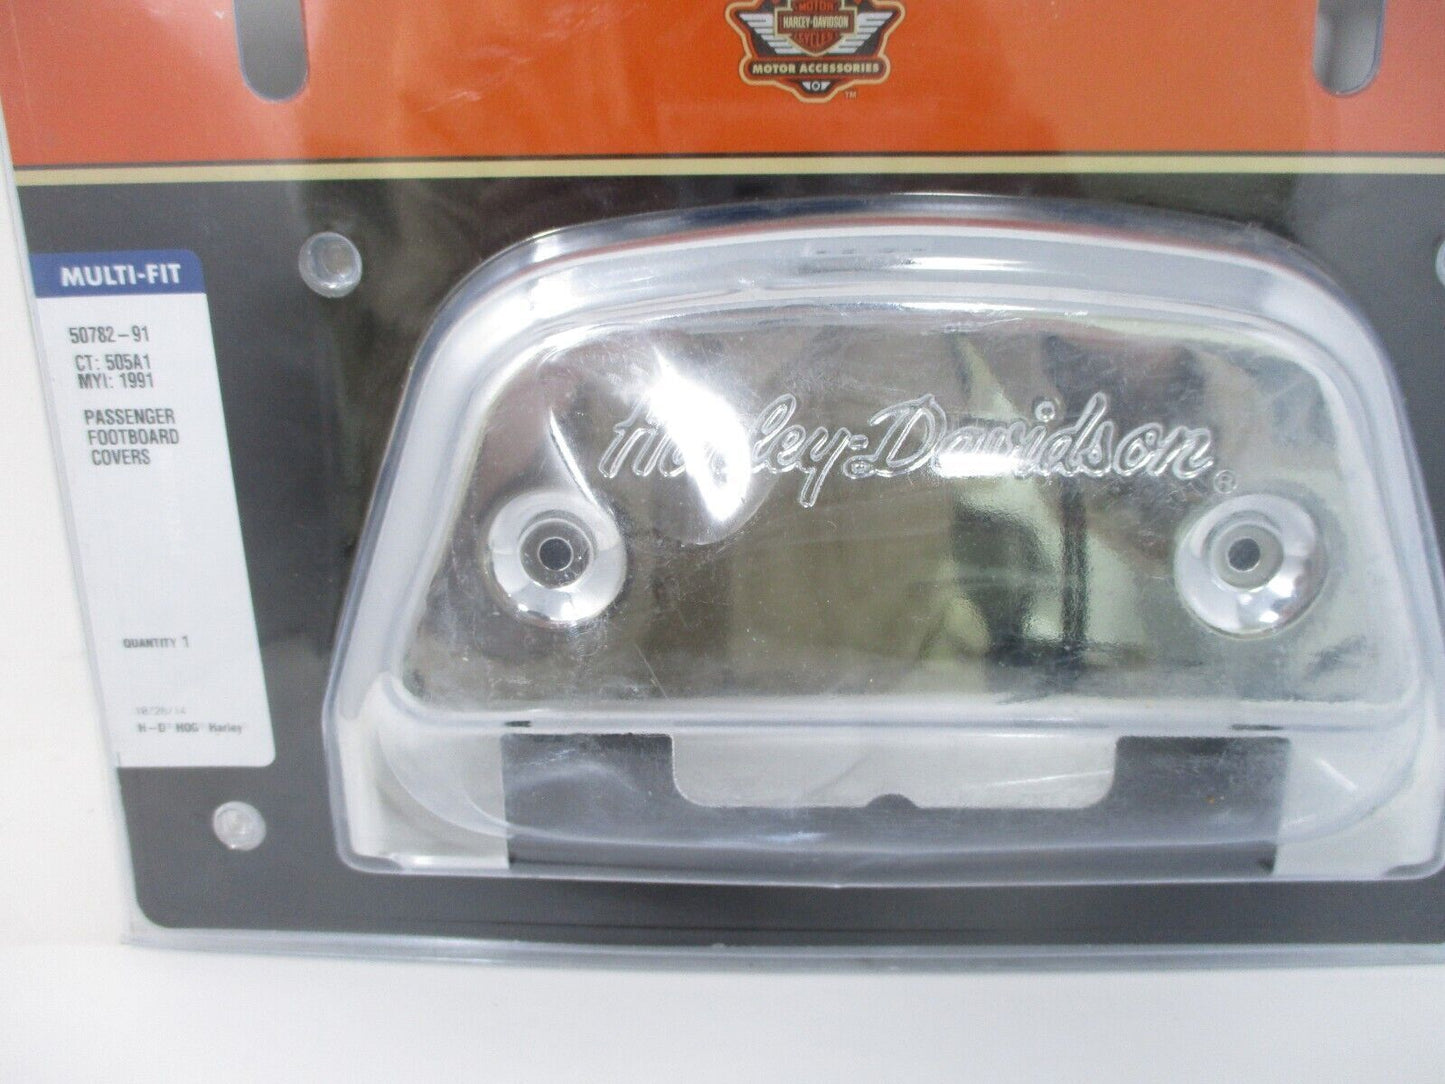 Harley-Davidson  Script Passenger Footboard Cover Fits '87-Later  50782-91